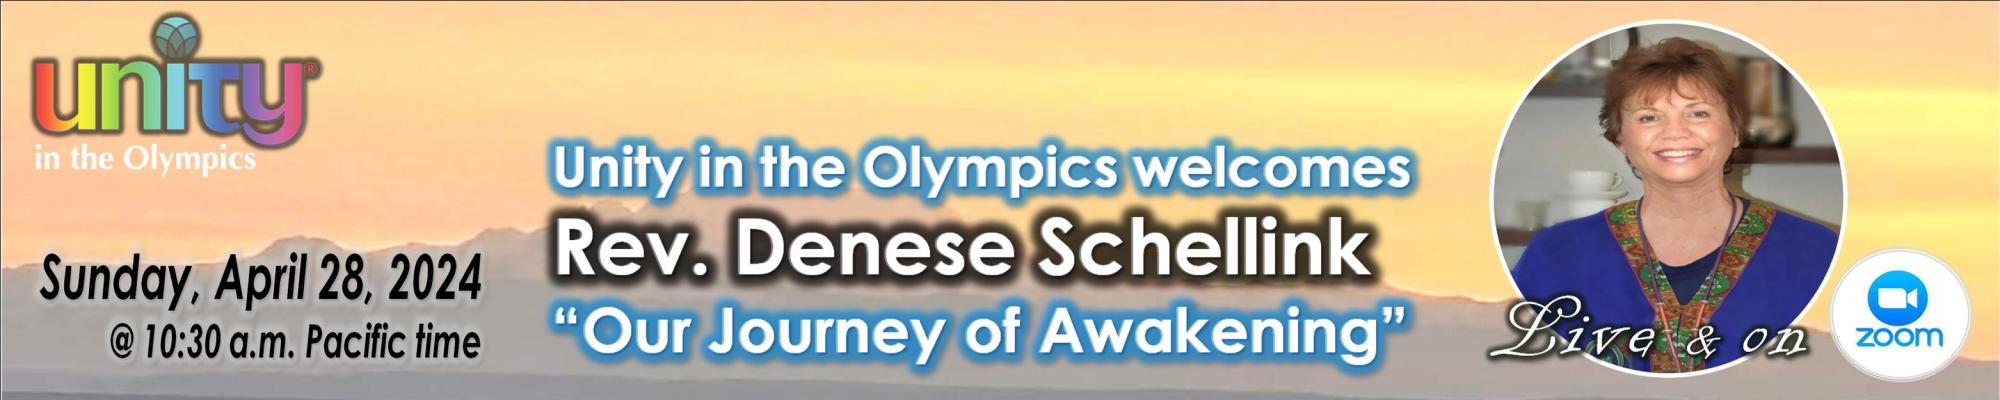 Sunday, April 28, 2024, "Our Journey of Awakening" with Rev. Denese Schellink